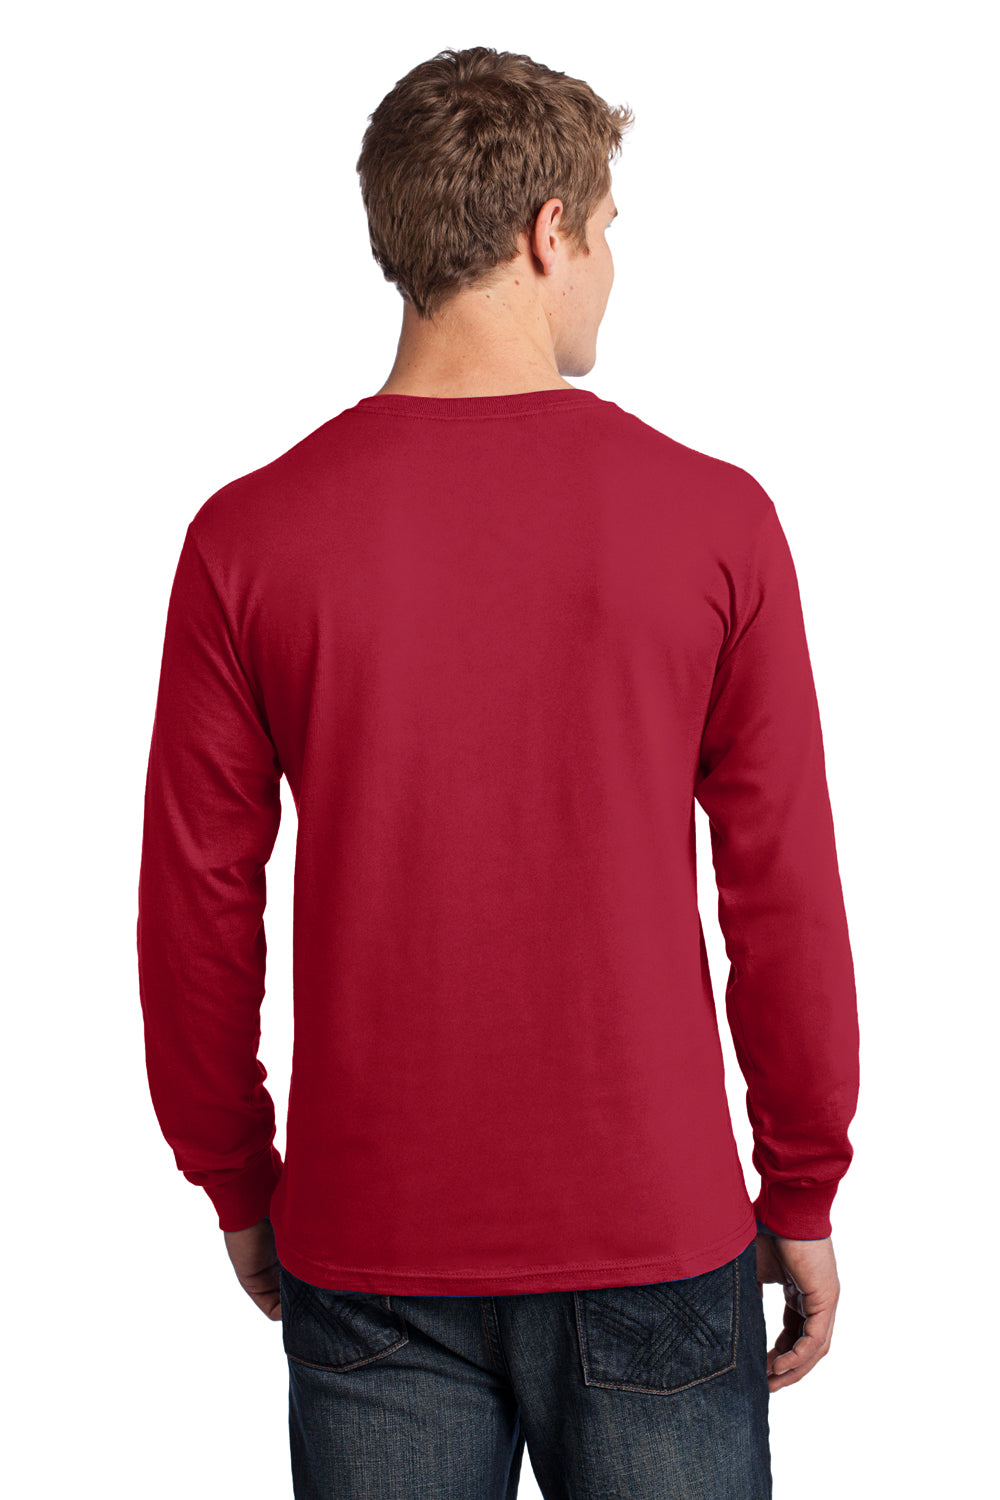 Port & Company PC54LS Mens Core Long Sleeve Crewneck T-Shirt Red Back